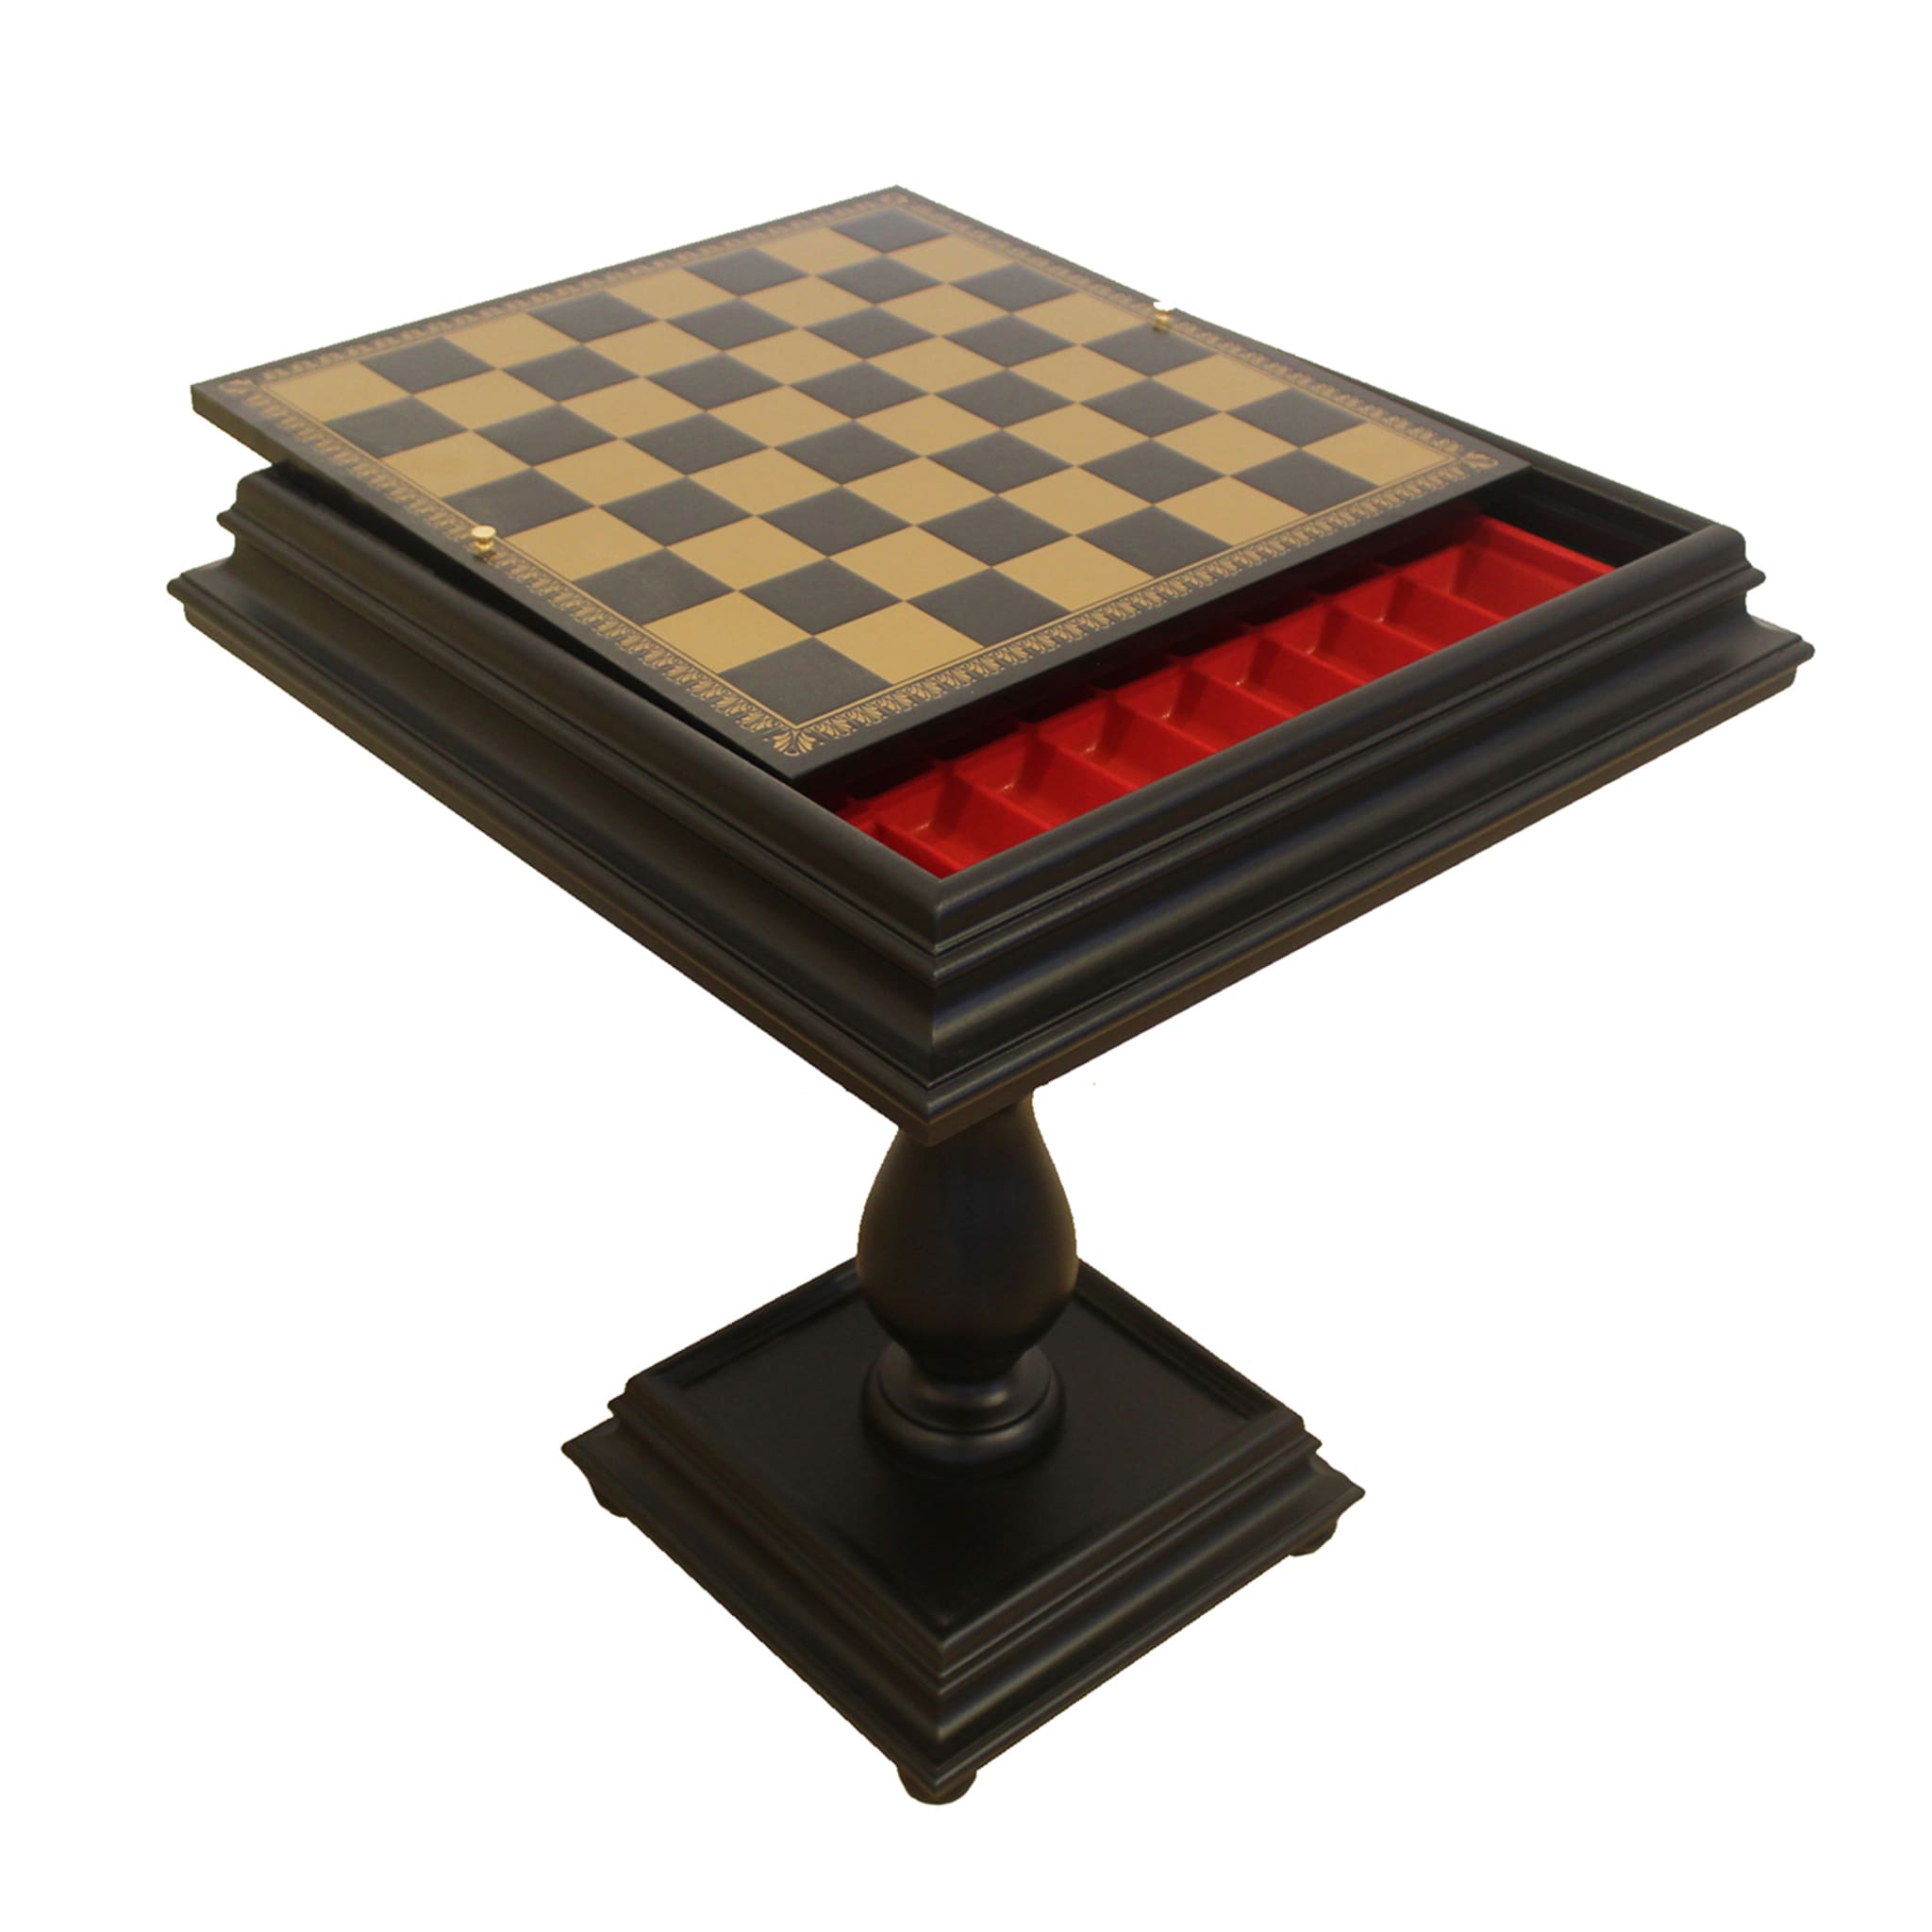 Impero Romano Chess Table - Alternative view 2